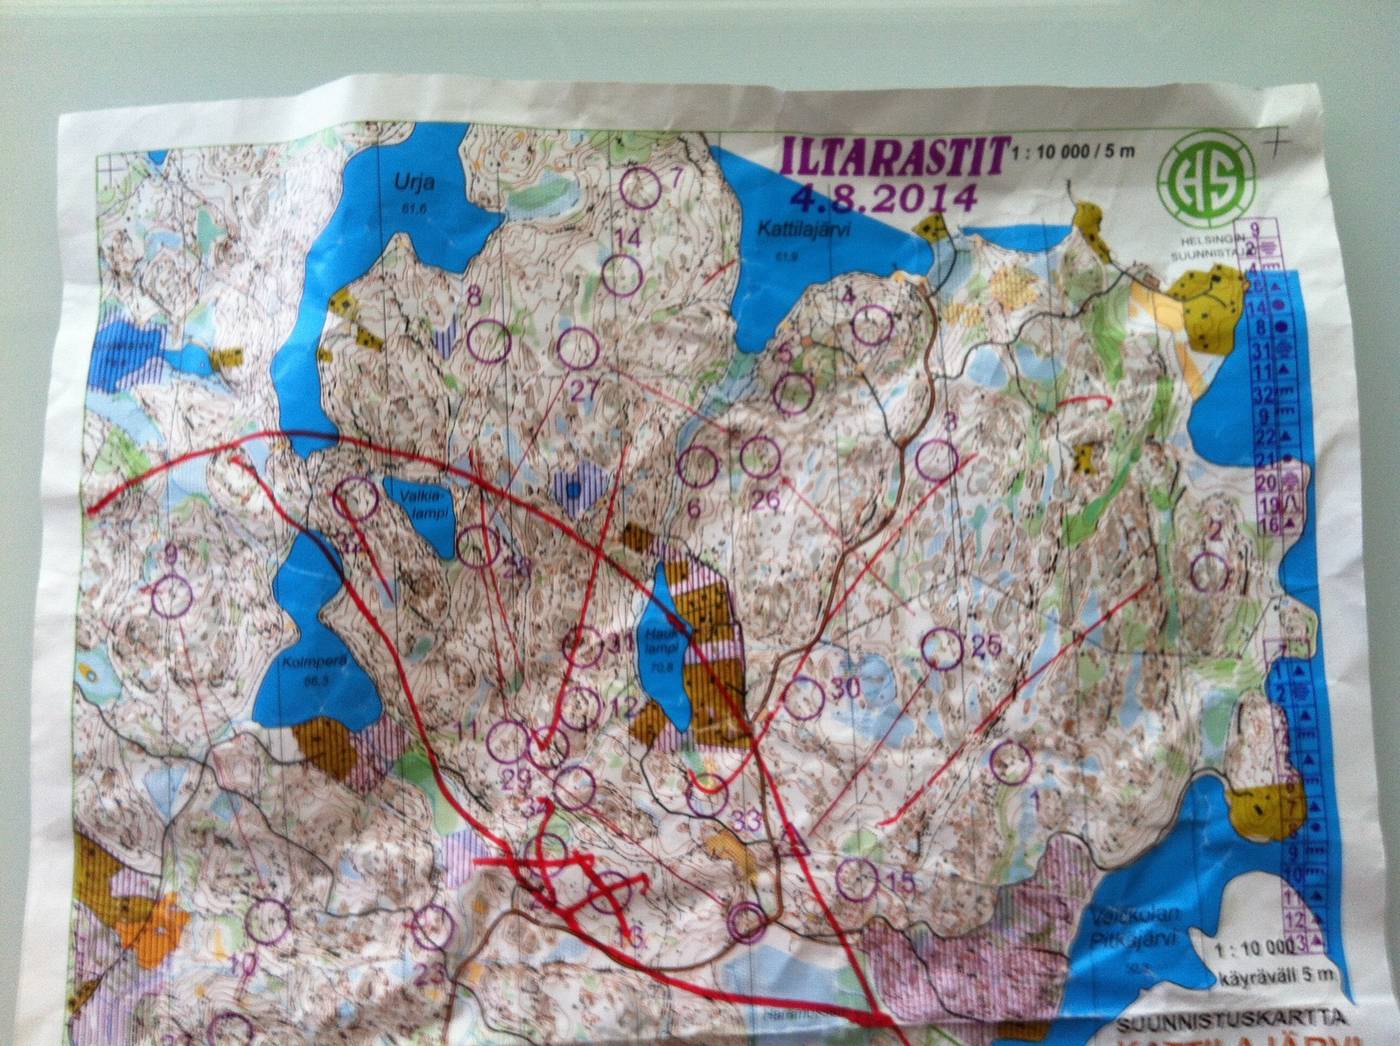 Kattilajärvi testing testing (05/08/2014)